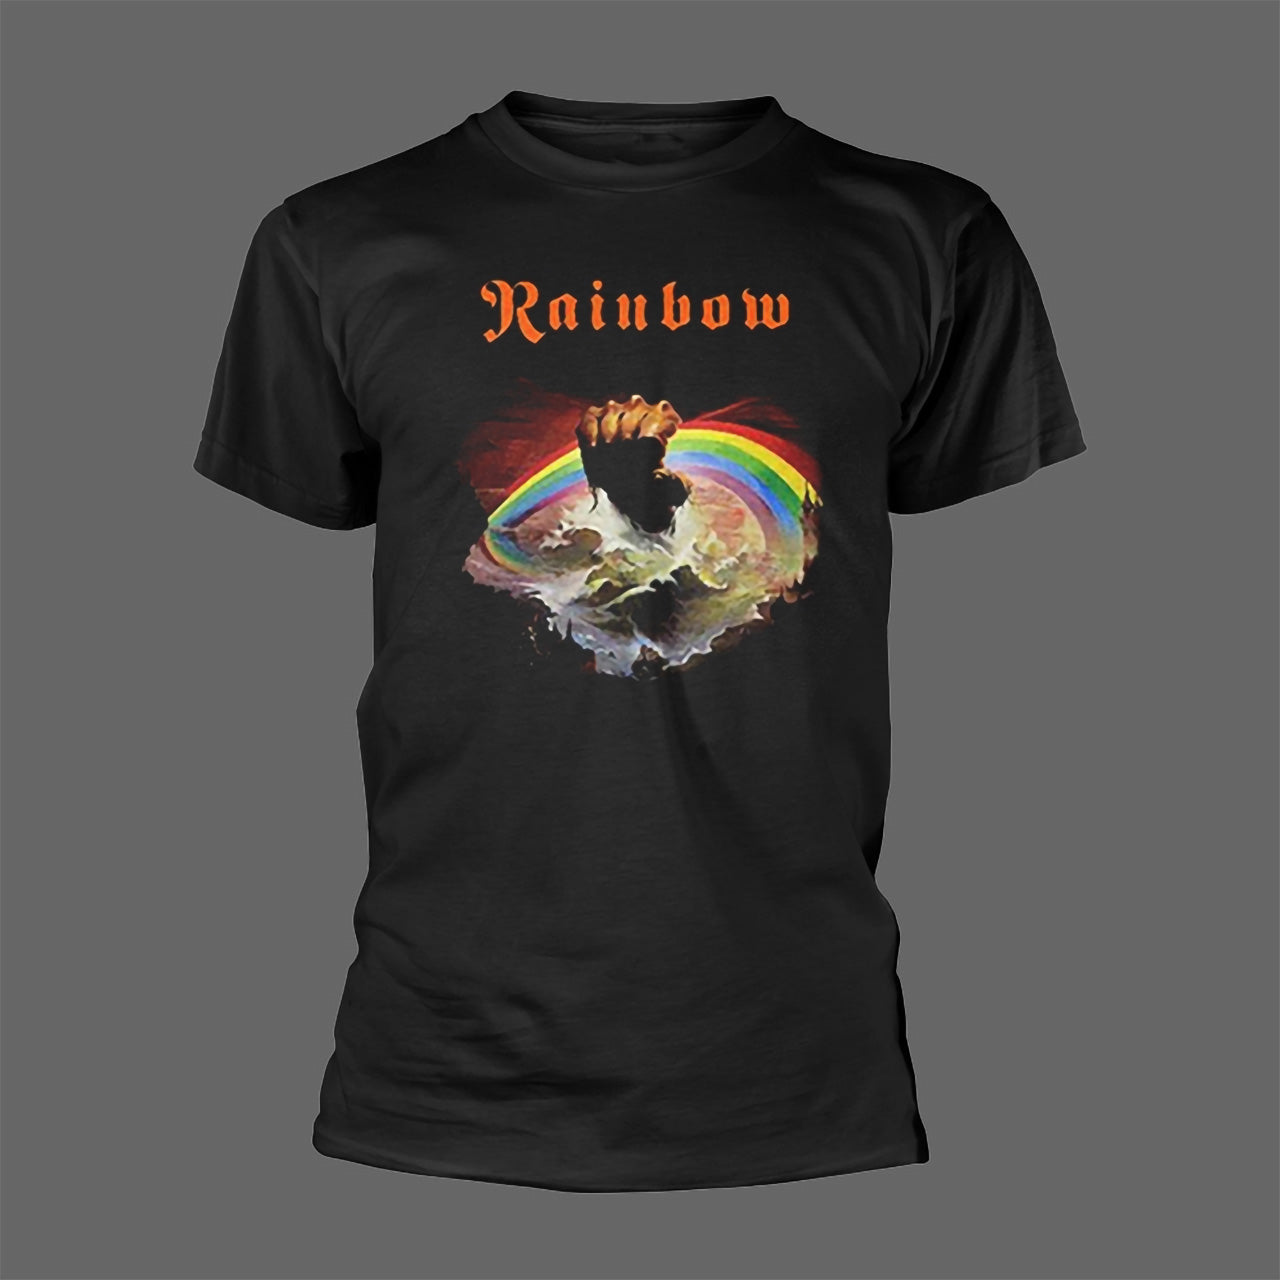 Rainbow - Rising (T-Shirt)